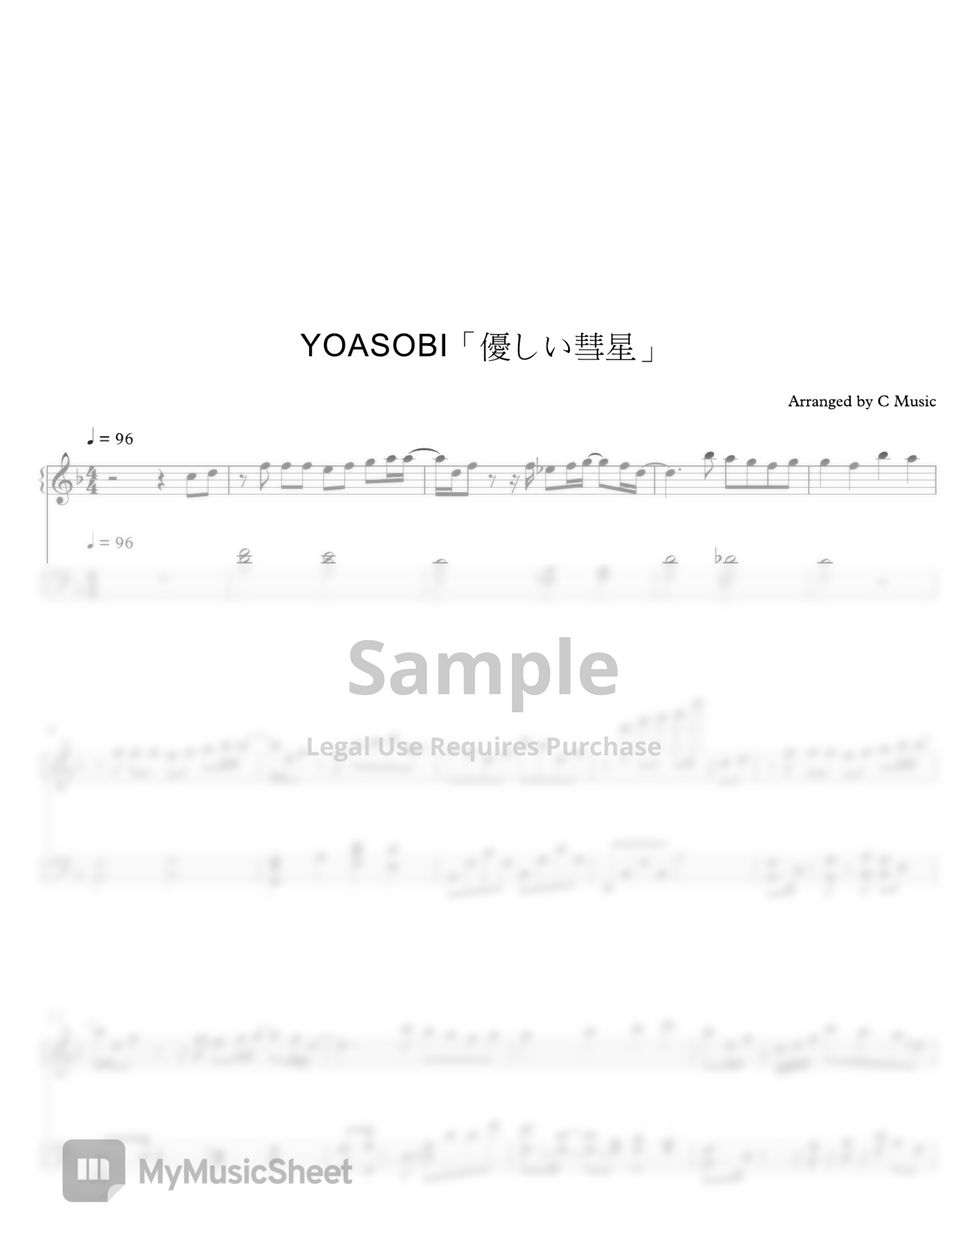 YOASOBI - 優しい彗星 Comet by C Music